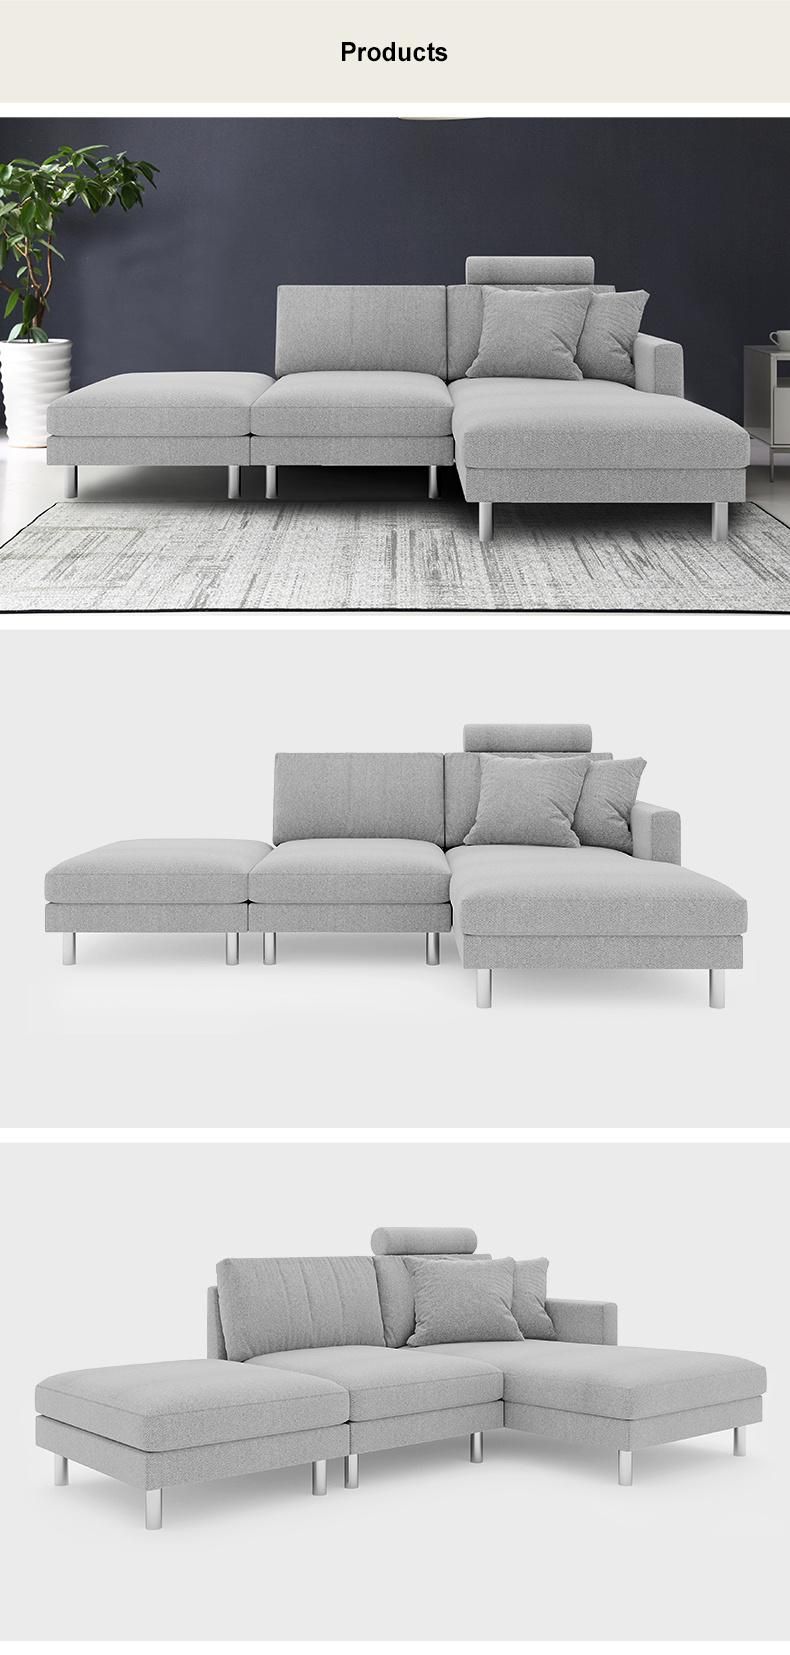 Metal Wood Home Furniture Recliner Sets L Shape Sofa